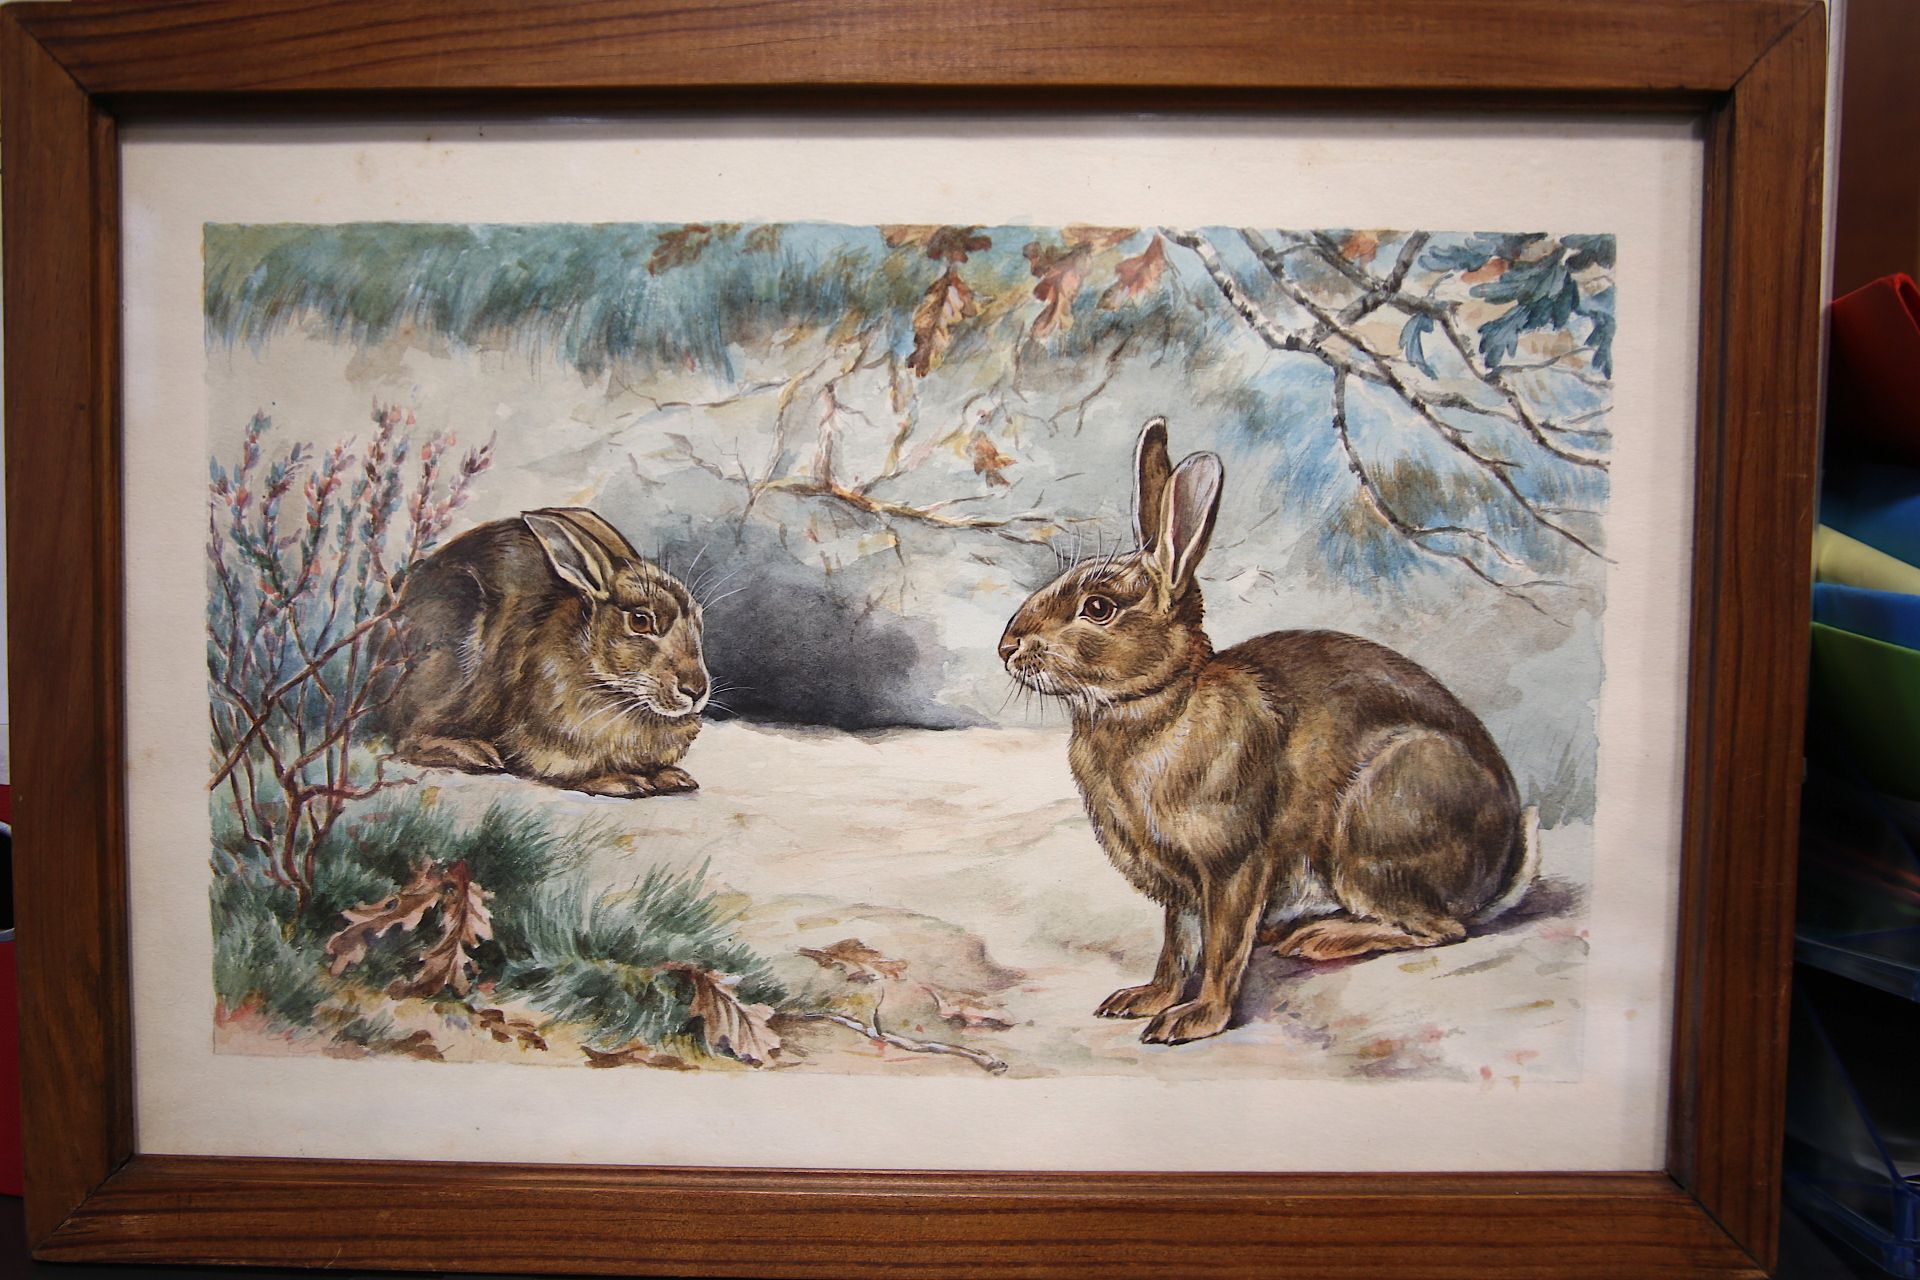 Null 
CASTELLAN归于
两只兔子
无符号水粉画
尺寸：22,5 x 33 cm